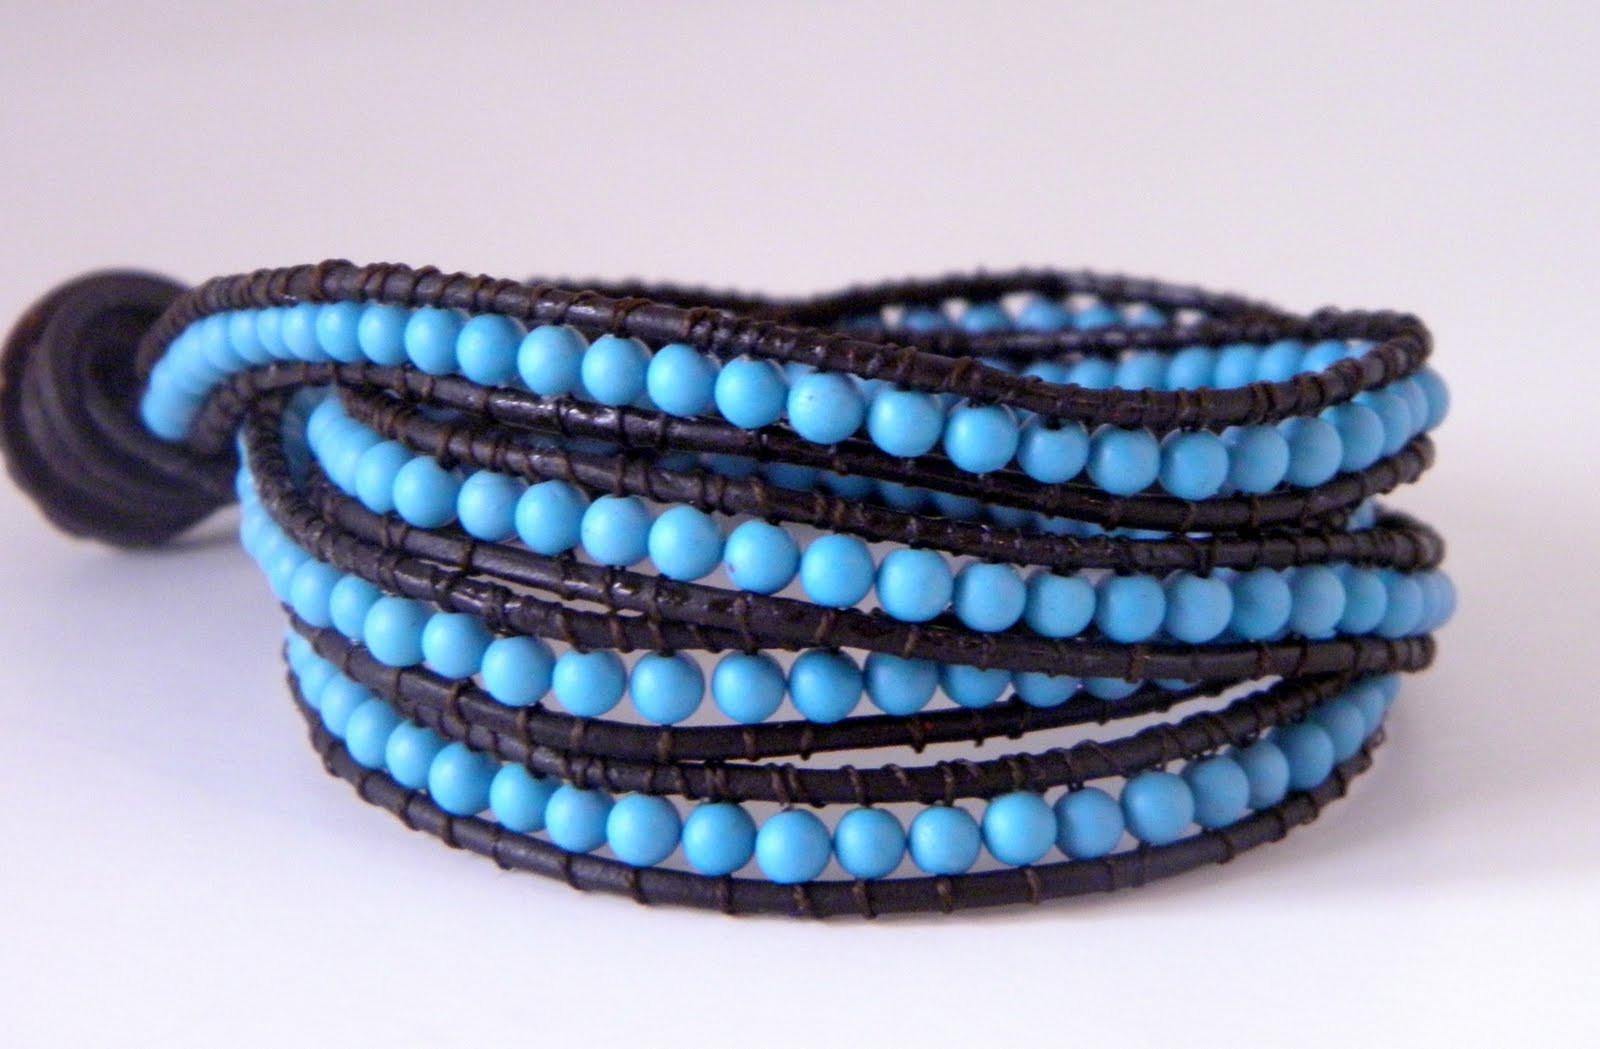 Best ideas about DIY Wrap Bracelet
. Save or Pin Tutorial Chan Luu Turquoise Wrap Bracelet buatkalunggelang Now.